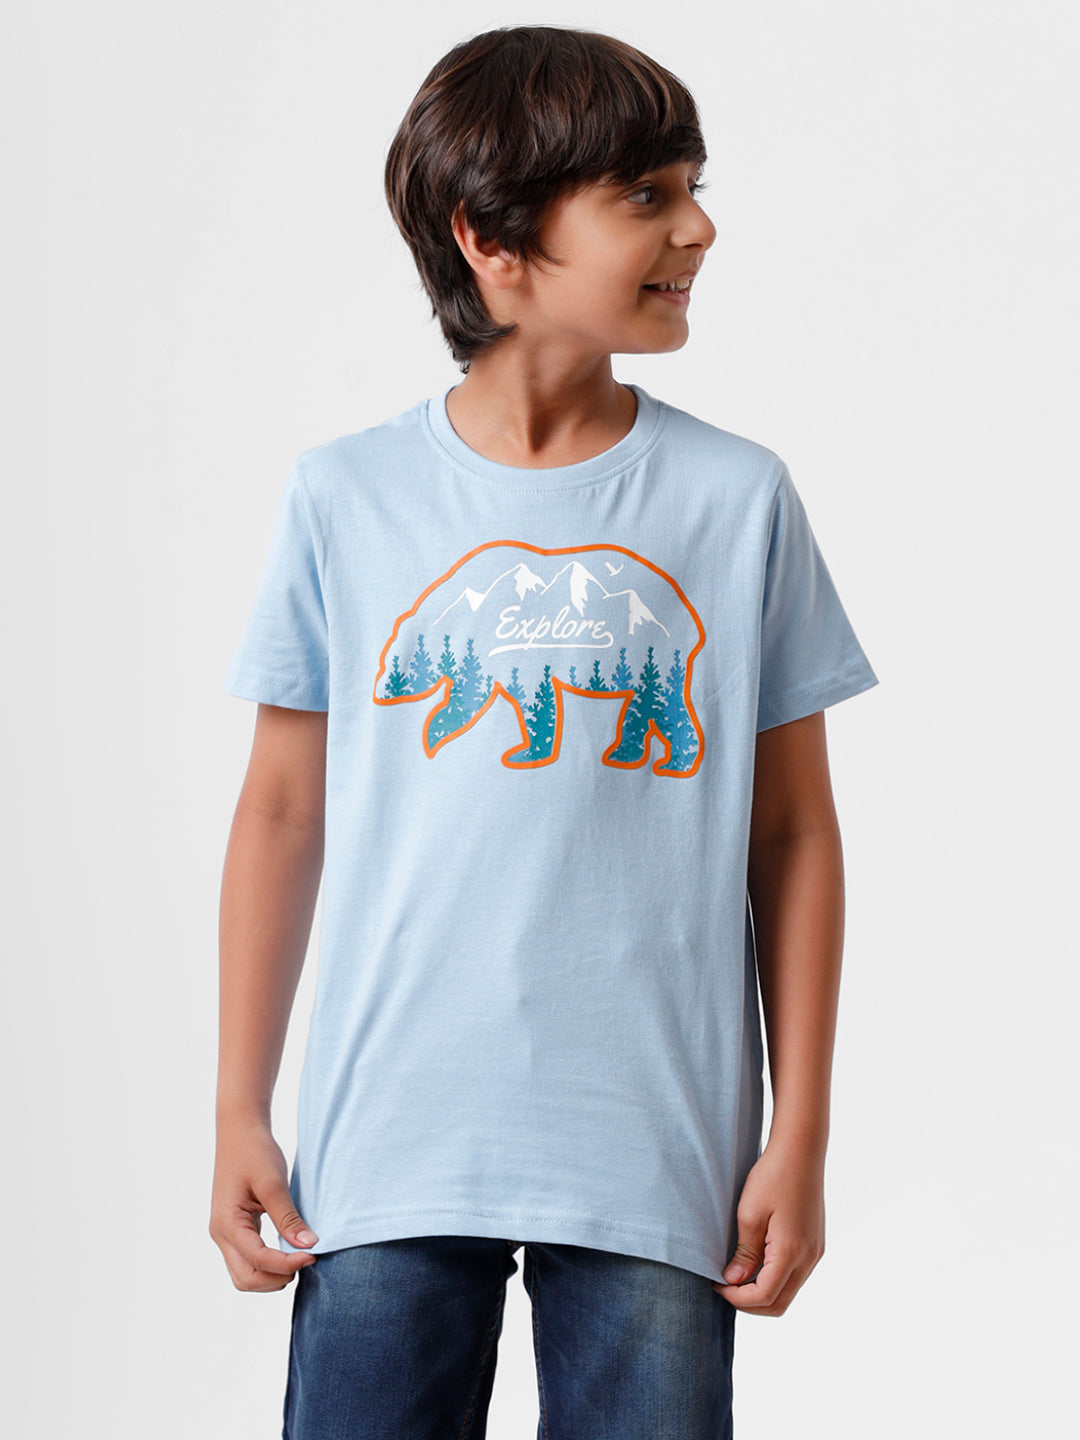 Kids - Boys Printed Half Sleeve T-Shirt Light Sea Blue